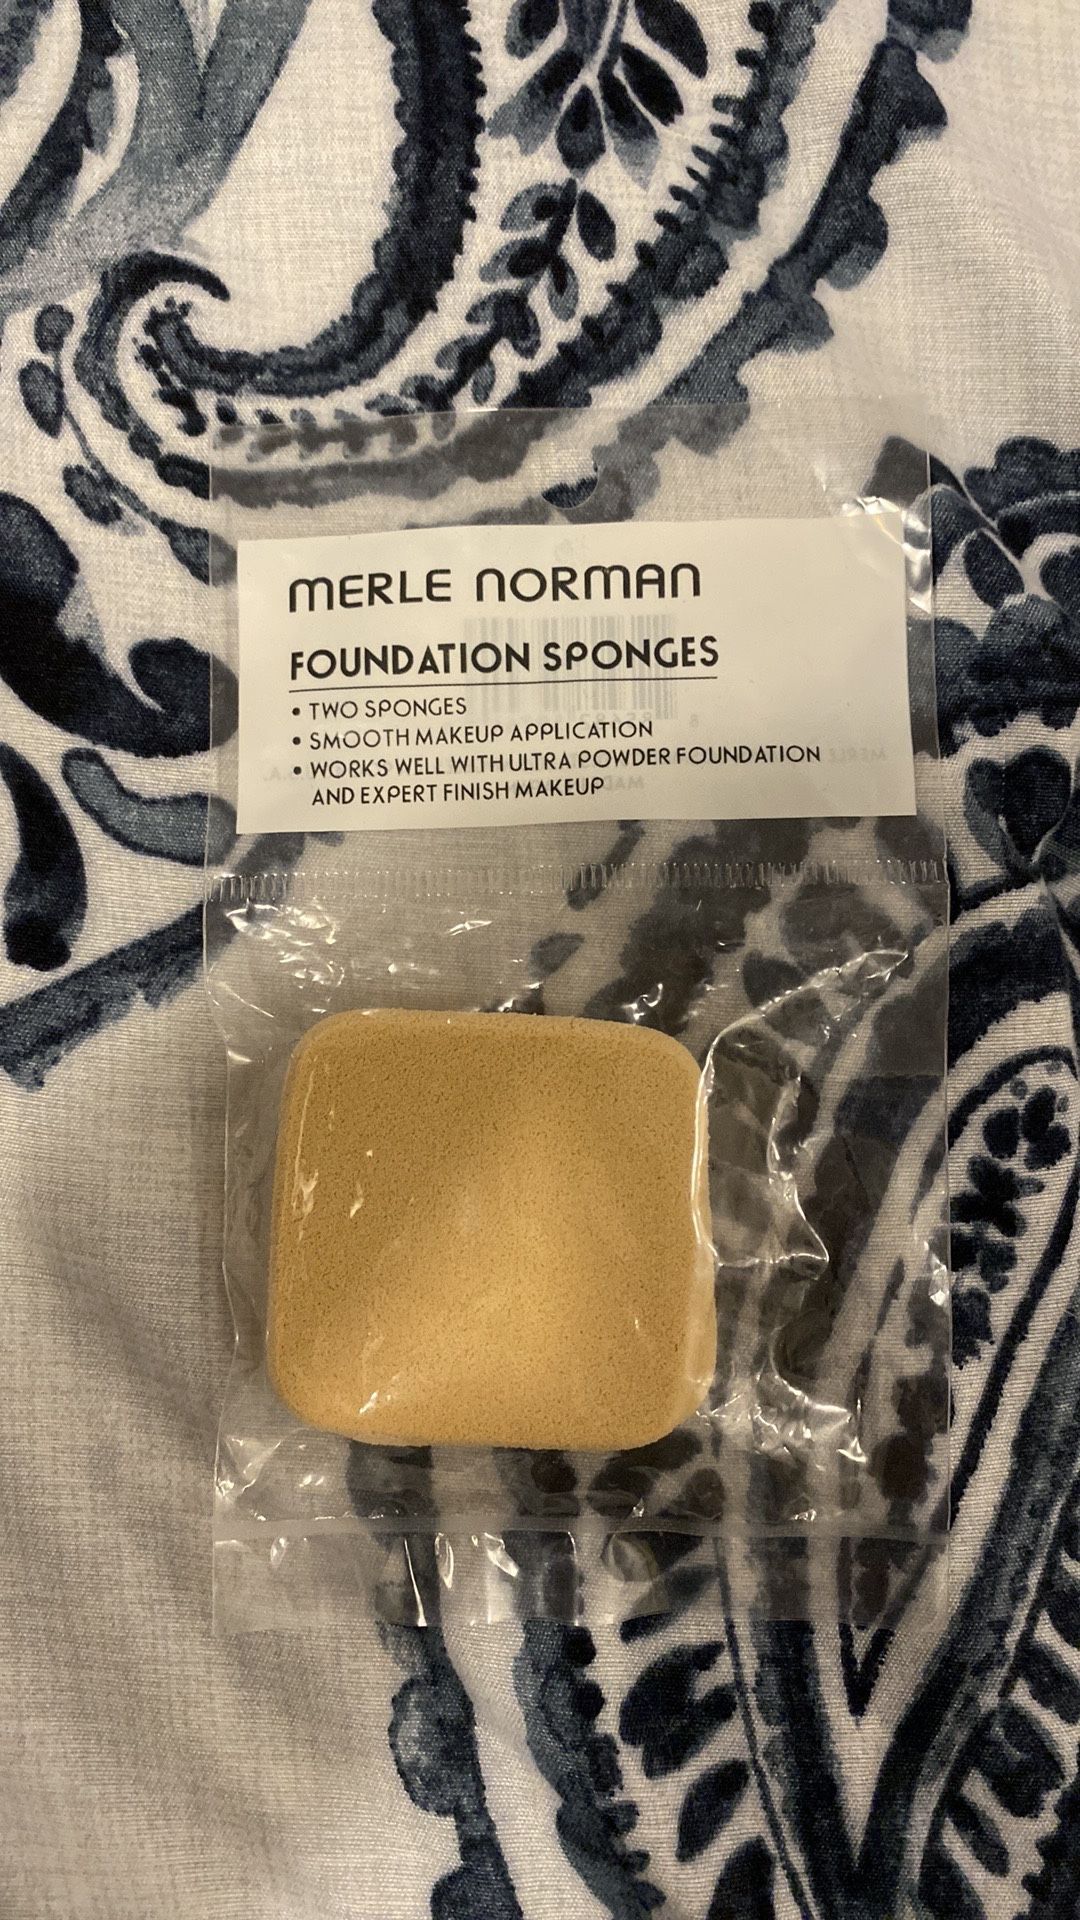 Foundation Sponges